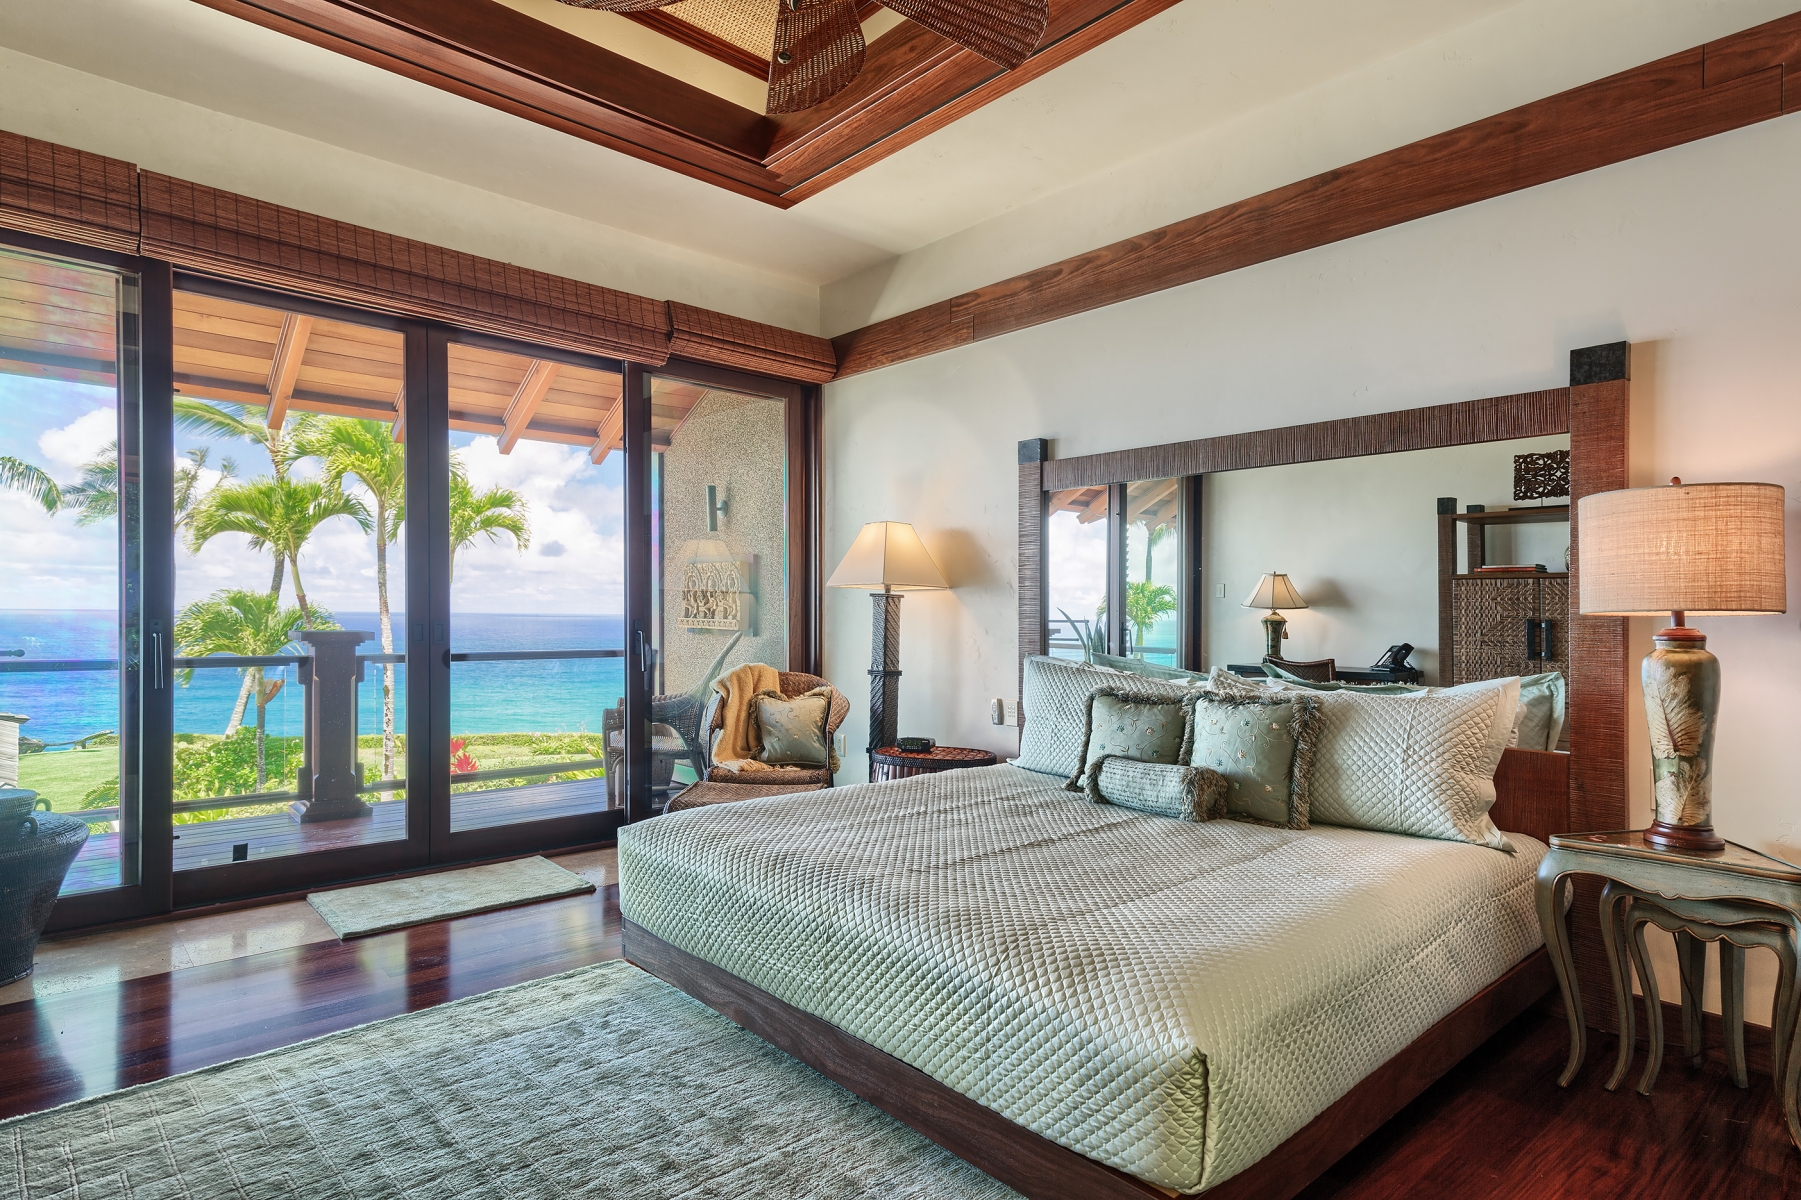 Série Aluga-se um Paraíso: 3 hospedagens incríveis no Havaí